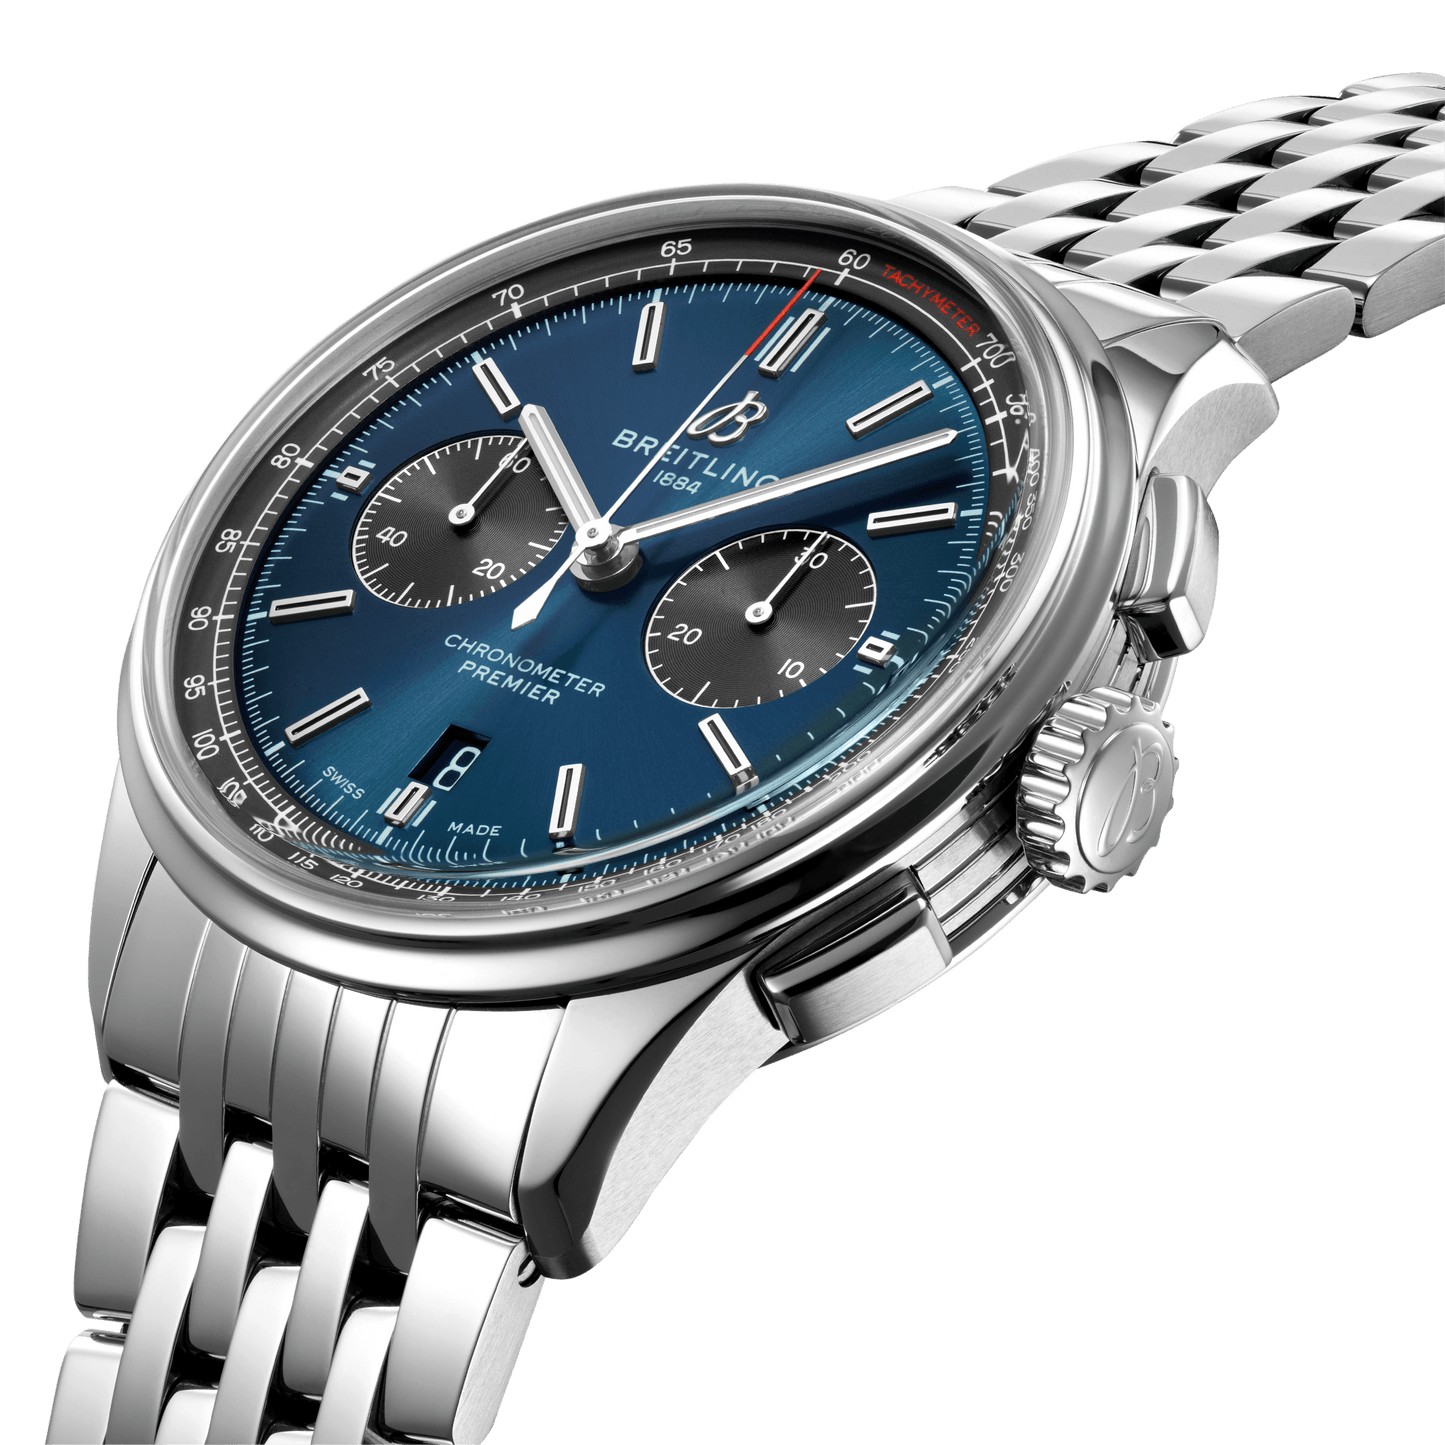 Luxury CHRONOGRAPH PREMIER Watch | BRTLNG Watch 01